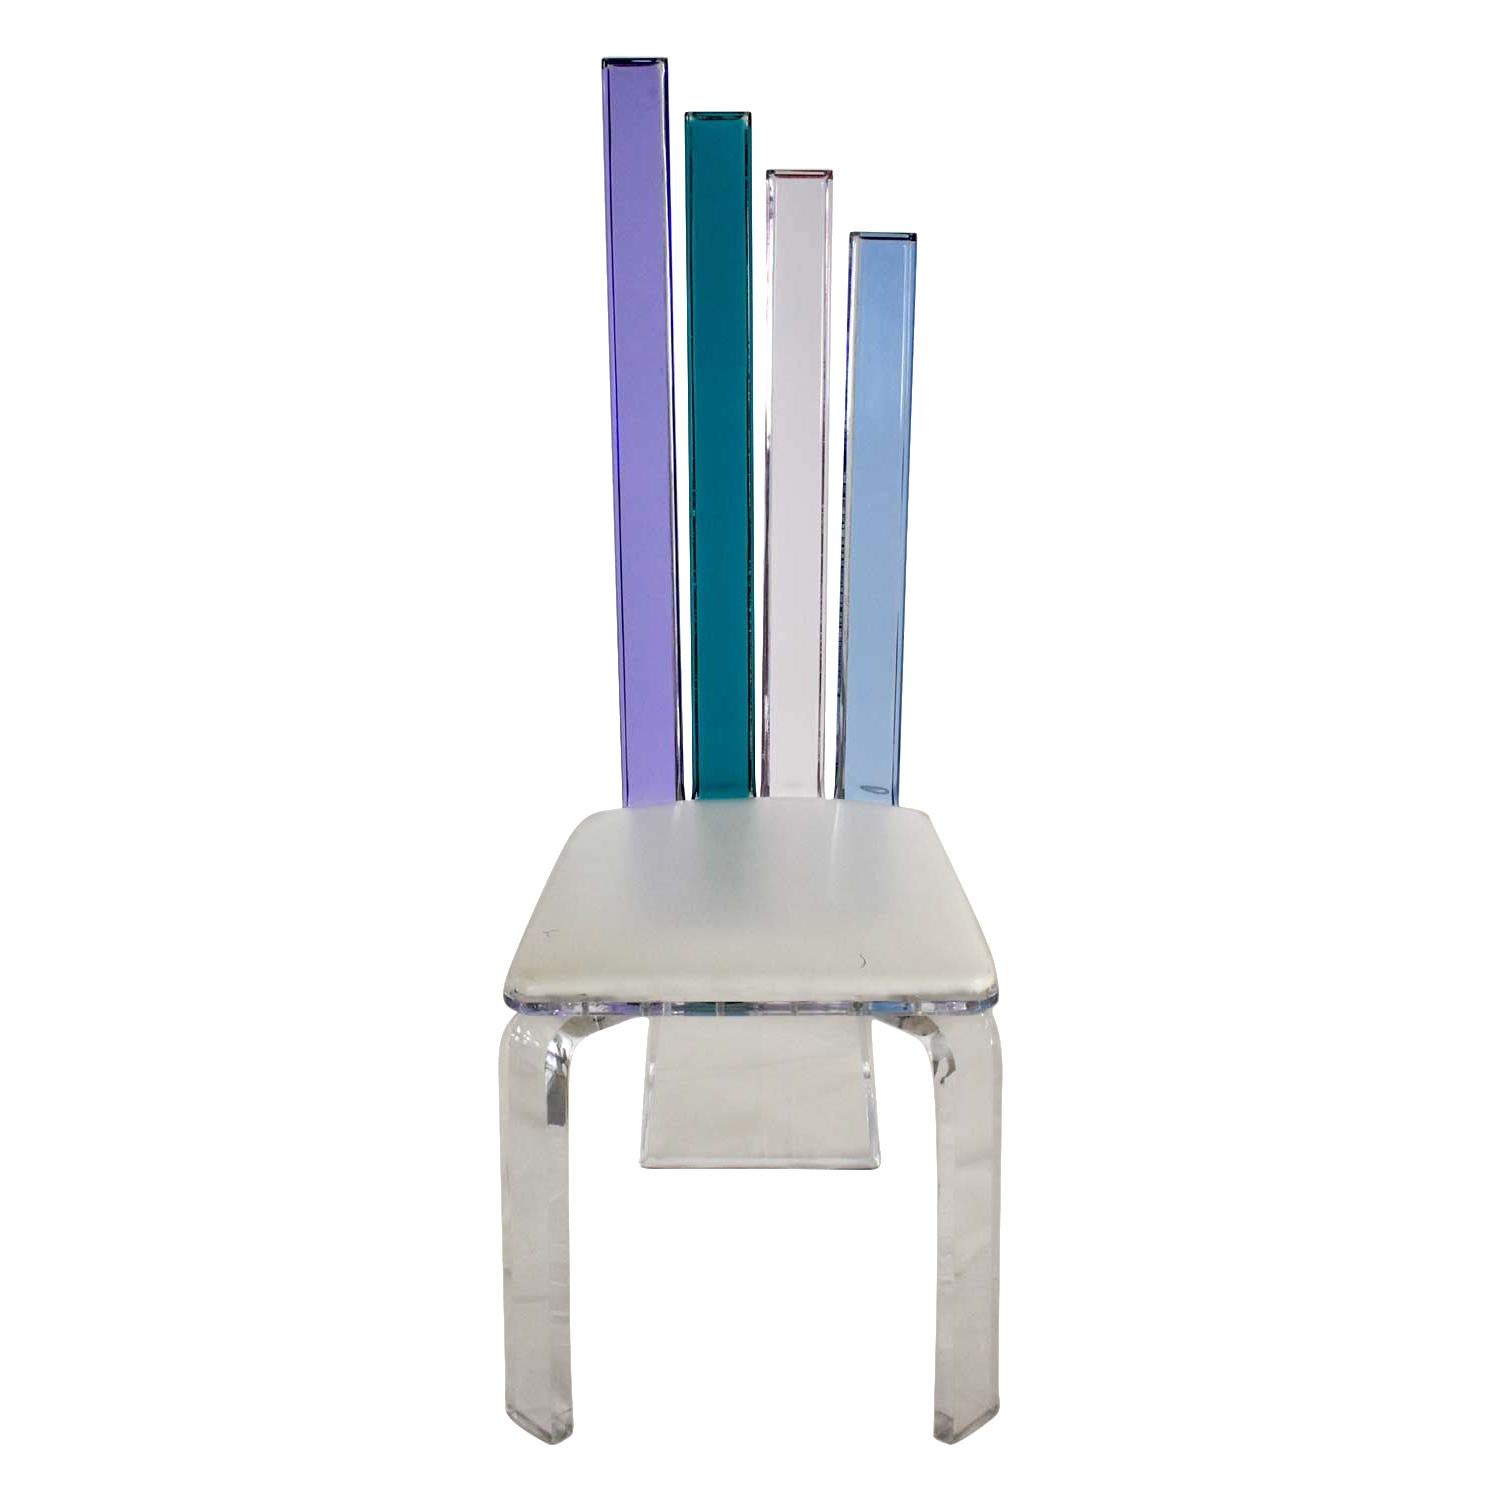 Modern Lucite Chair Rainbow Graduated Back Slats Attr Shlomi Haziza for H Studio For Sale